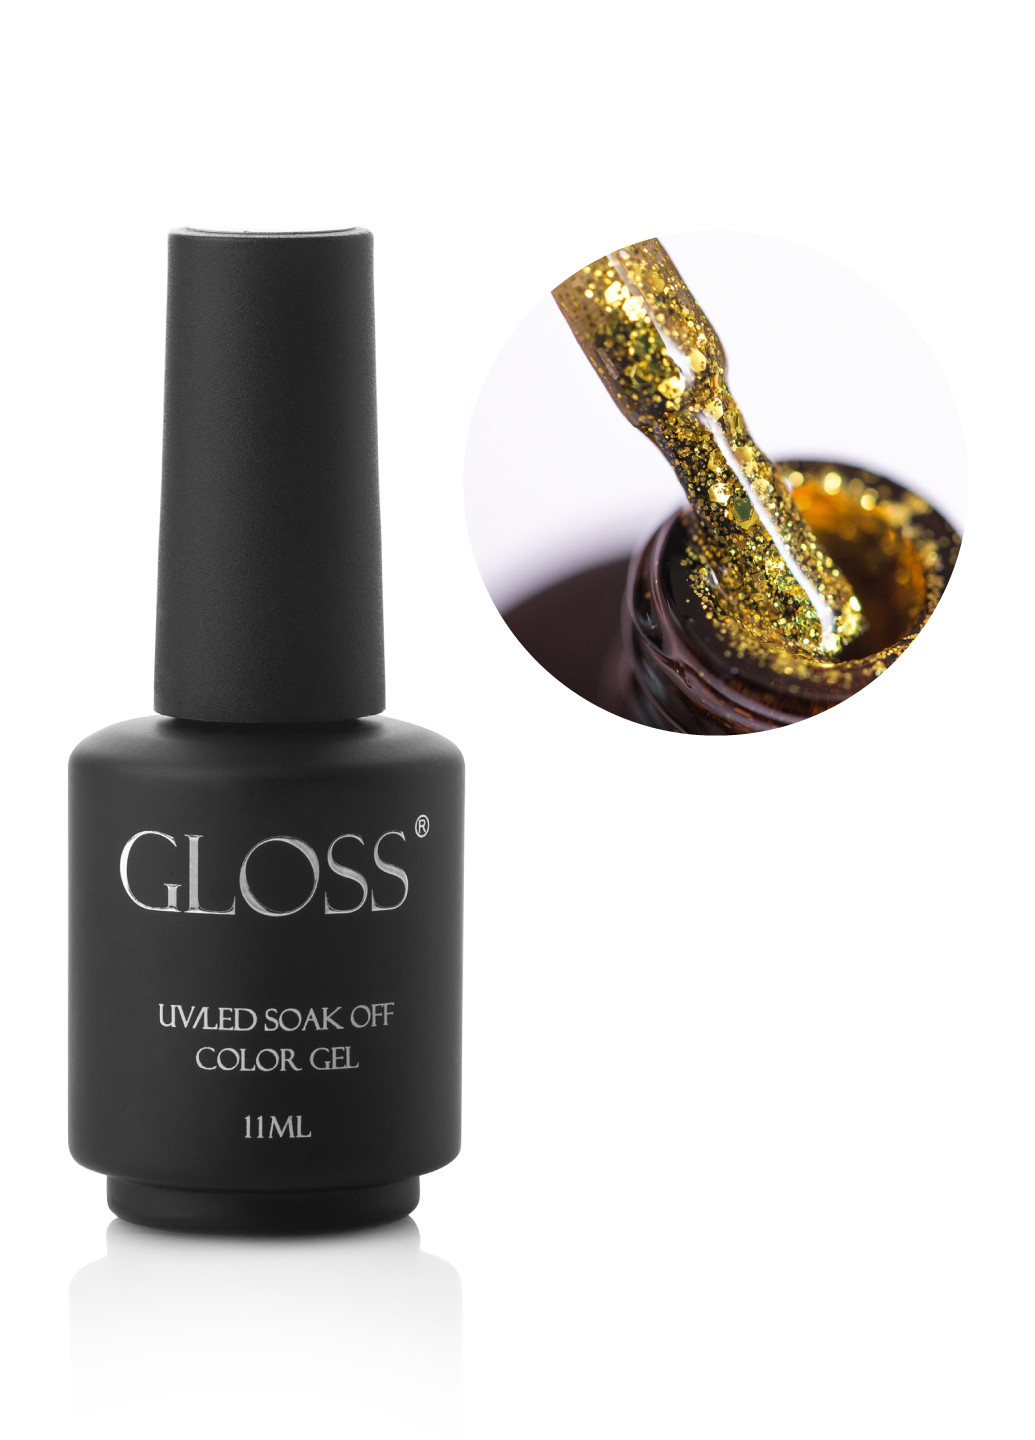 Гель-лак GLOSS 414 (золотисто-желтый, микроблеск и блестки), 11 мл Gloss Company кристал (269119910)